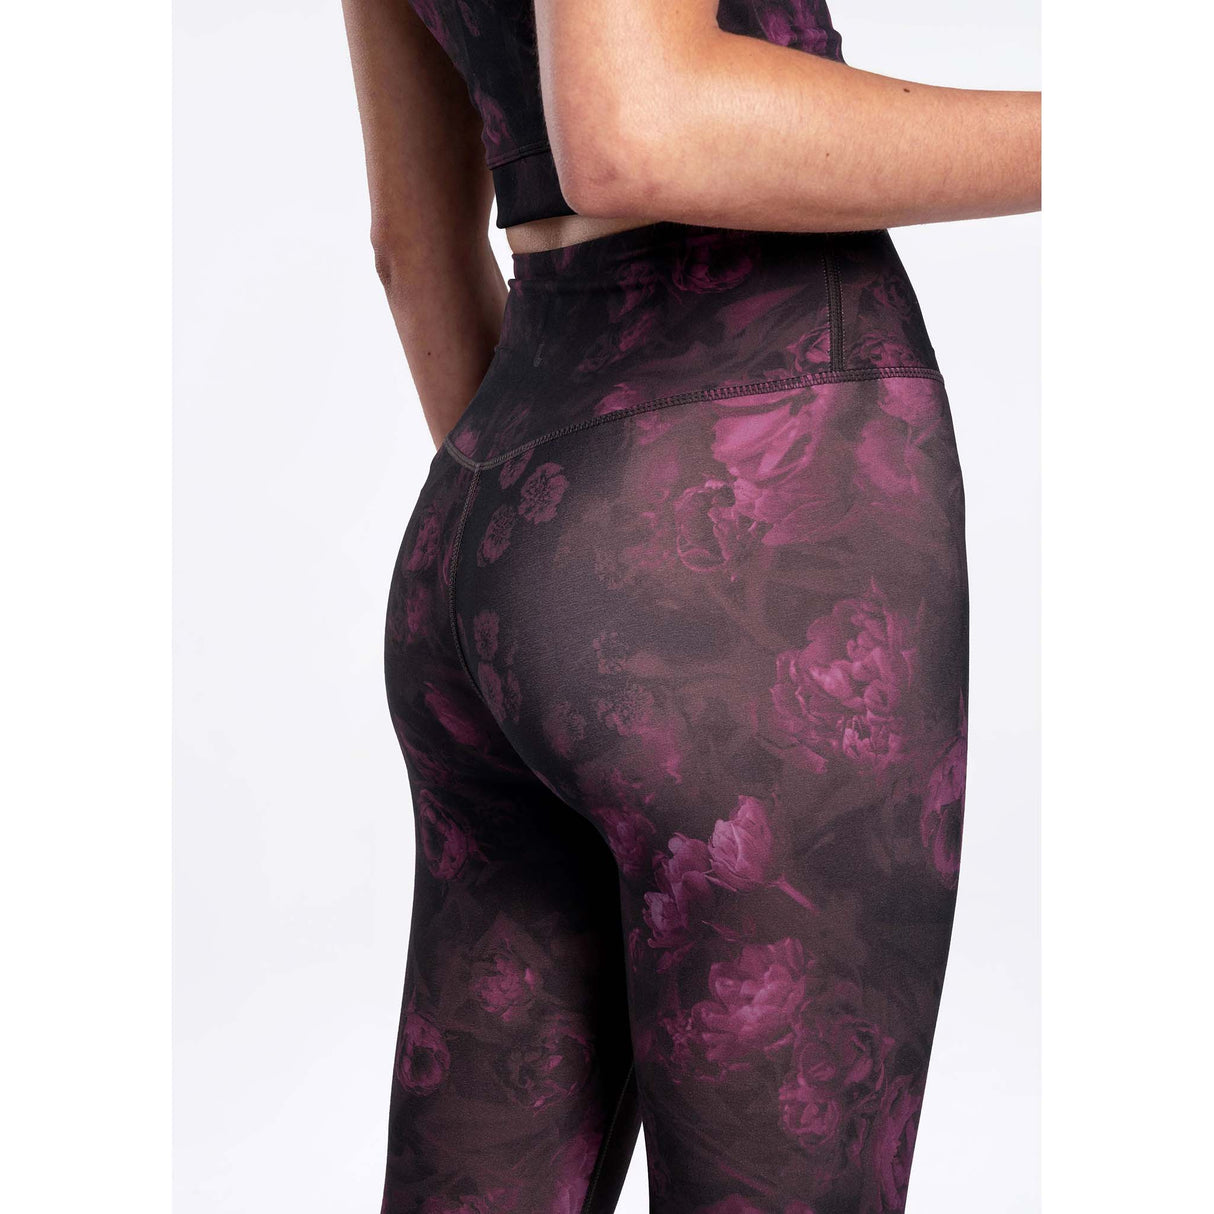 Lole leggings 7/8 taille haute Dalia crushed bloom purple pour femme lateral